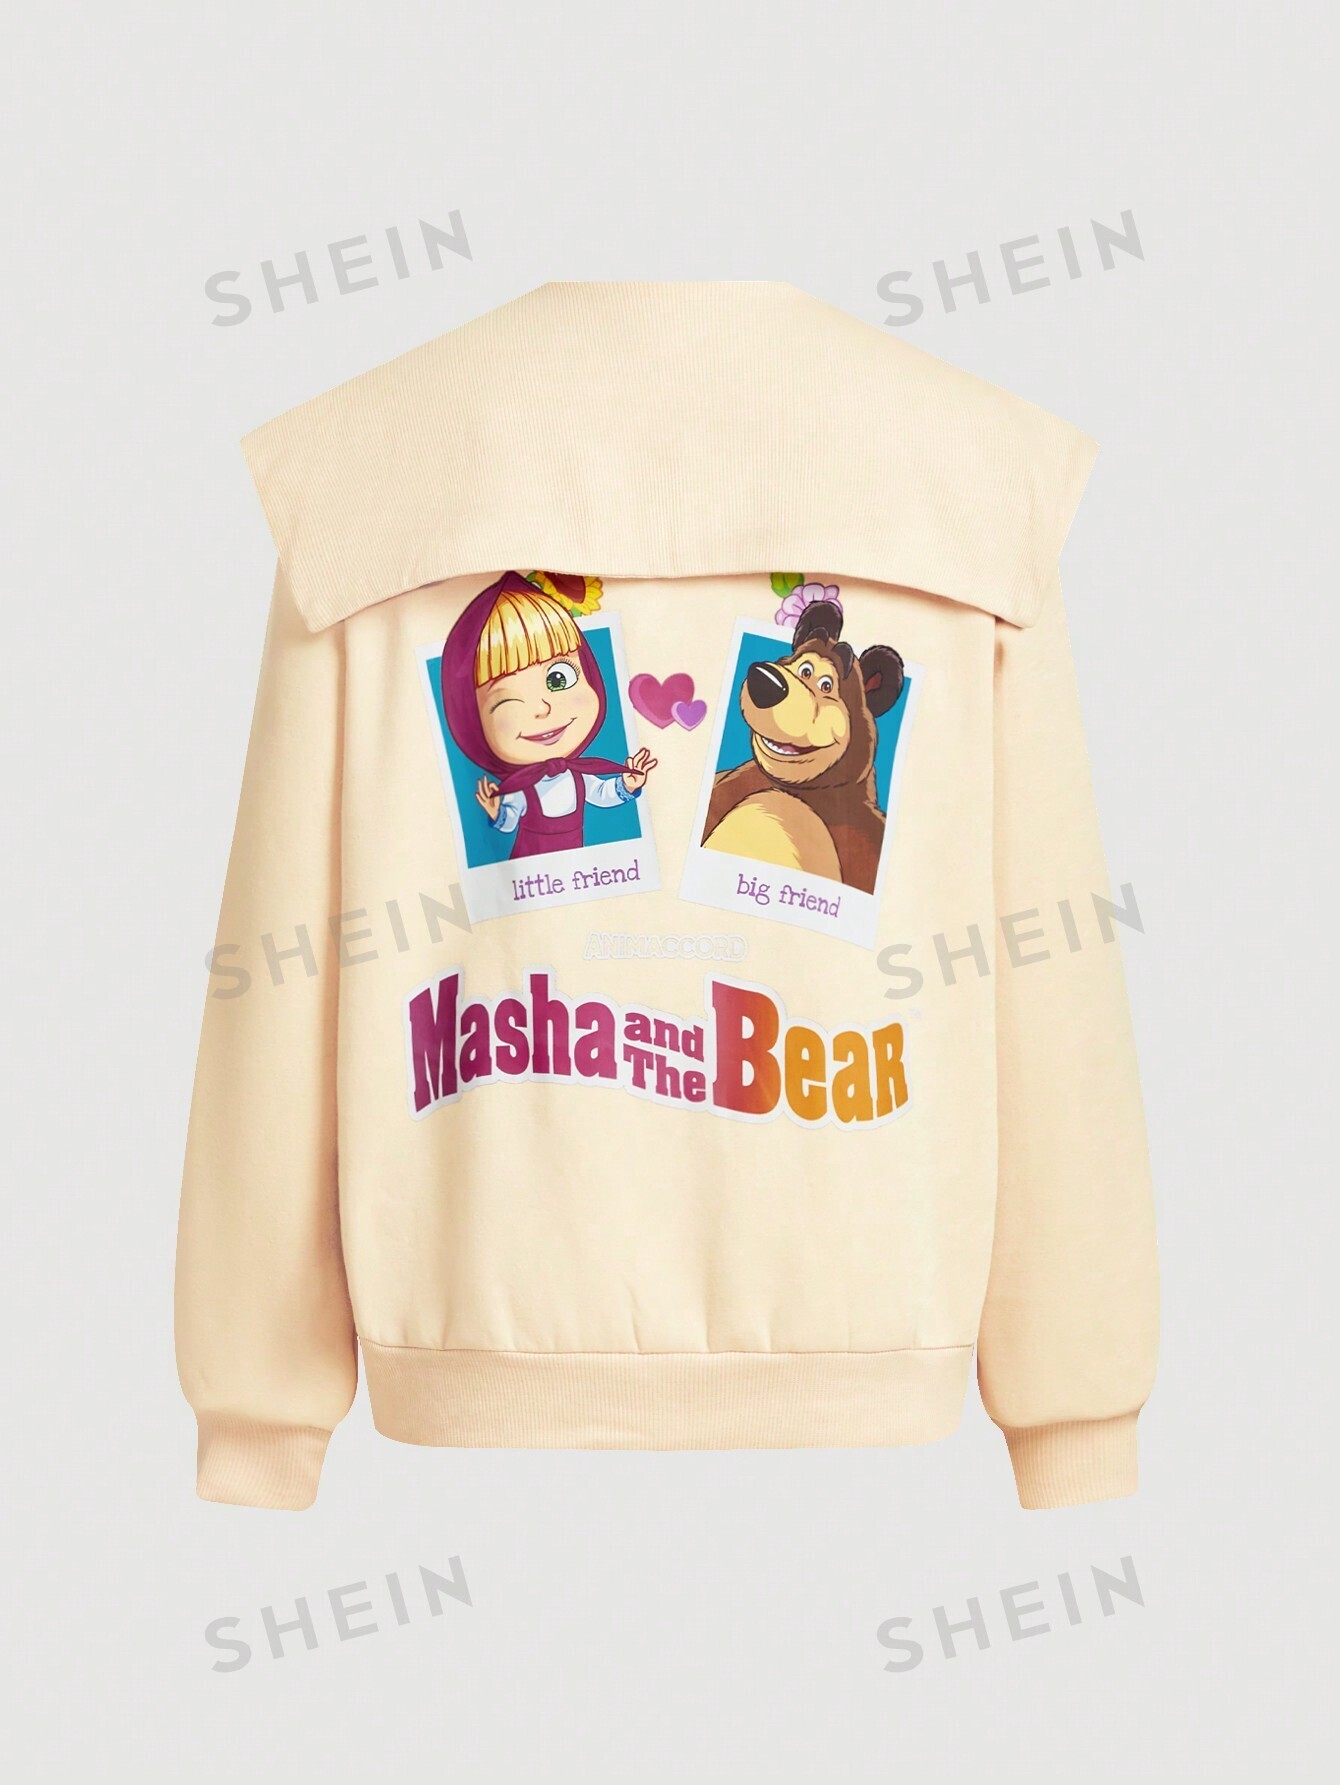 masha and friends notecards набор открыток SHEIN X Маша и Медведь 1 шт. Толстовка с заниженными плечами с рисунком и буквами, абрикос